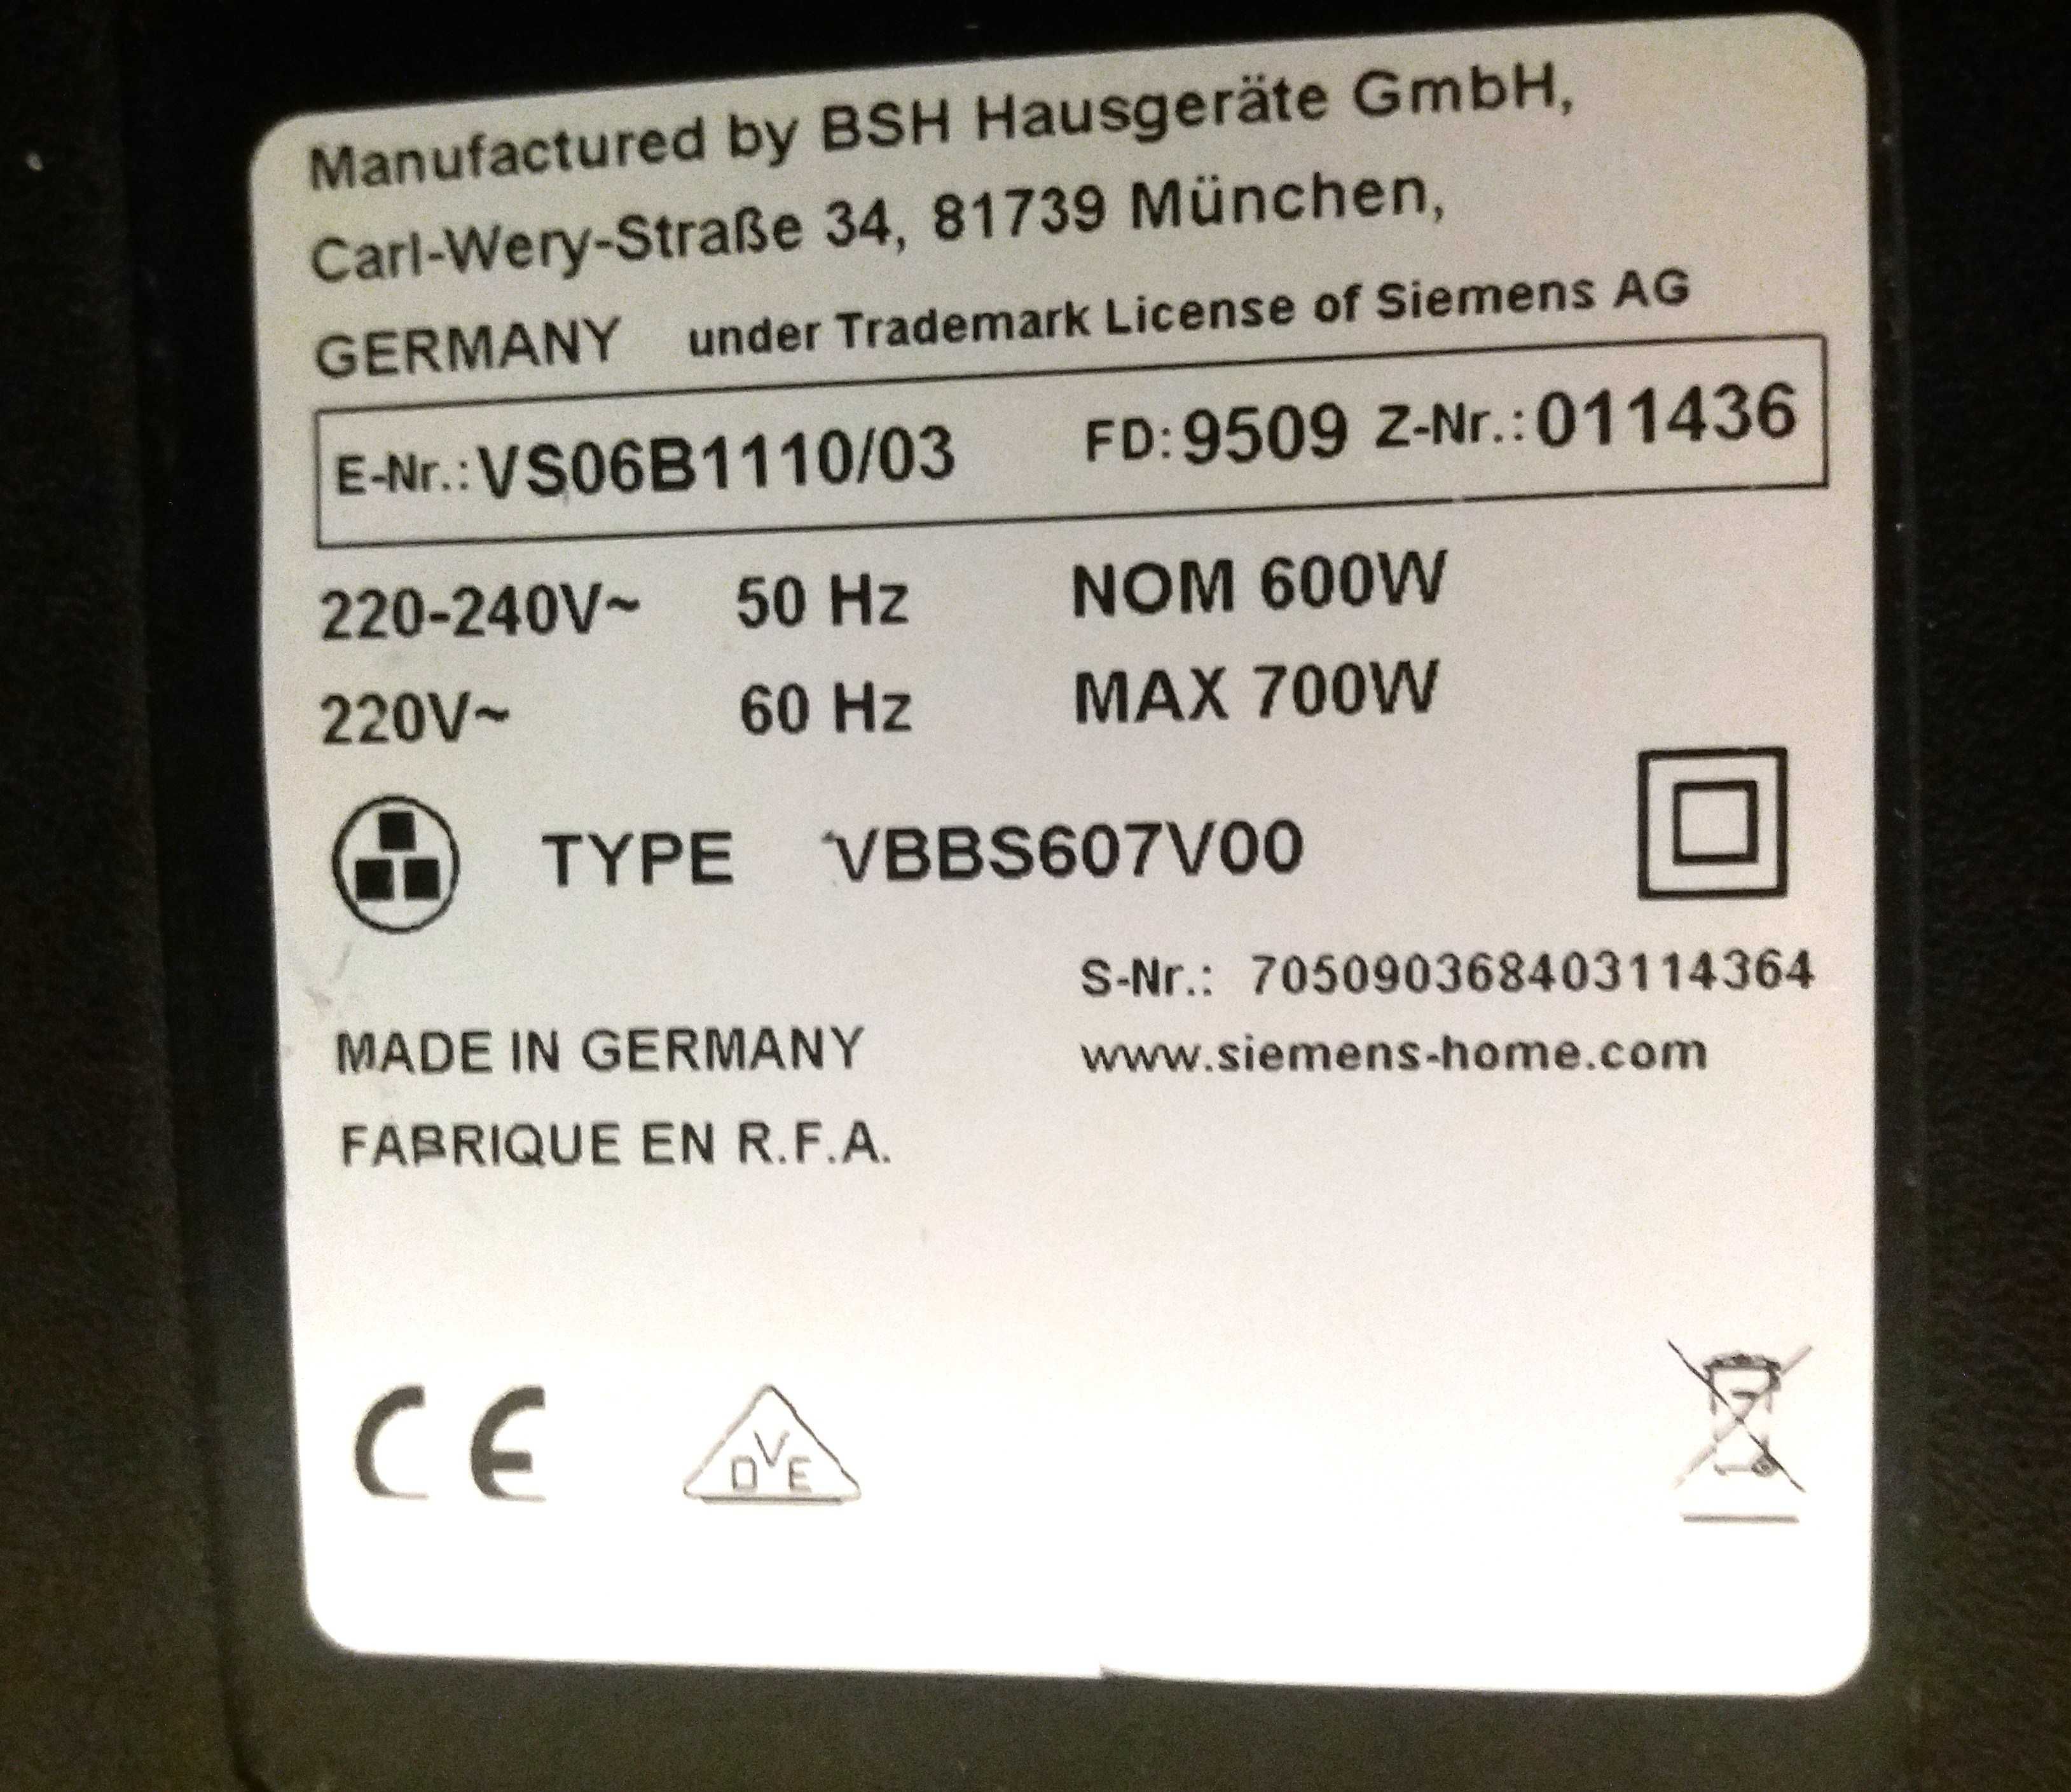 Lichidez locuință, vînd un aspirator german Siemens cu piese rezervă